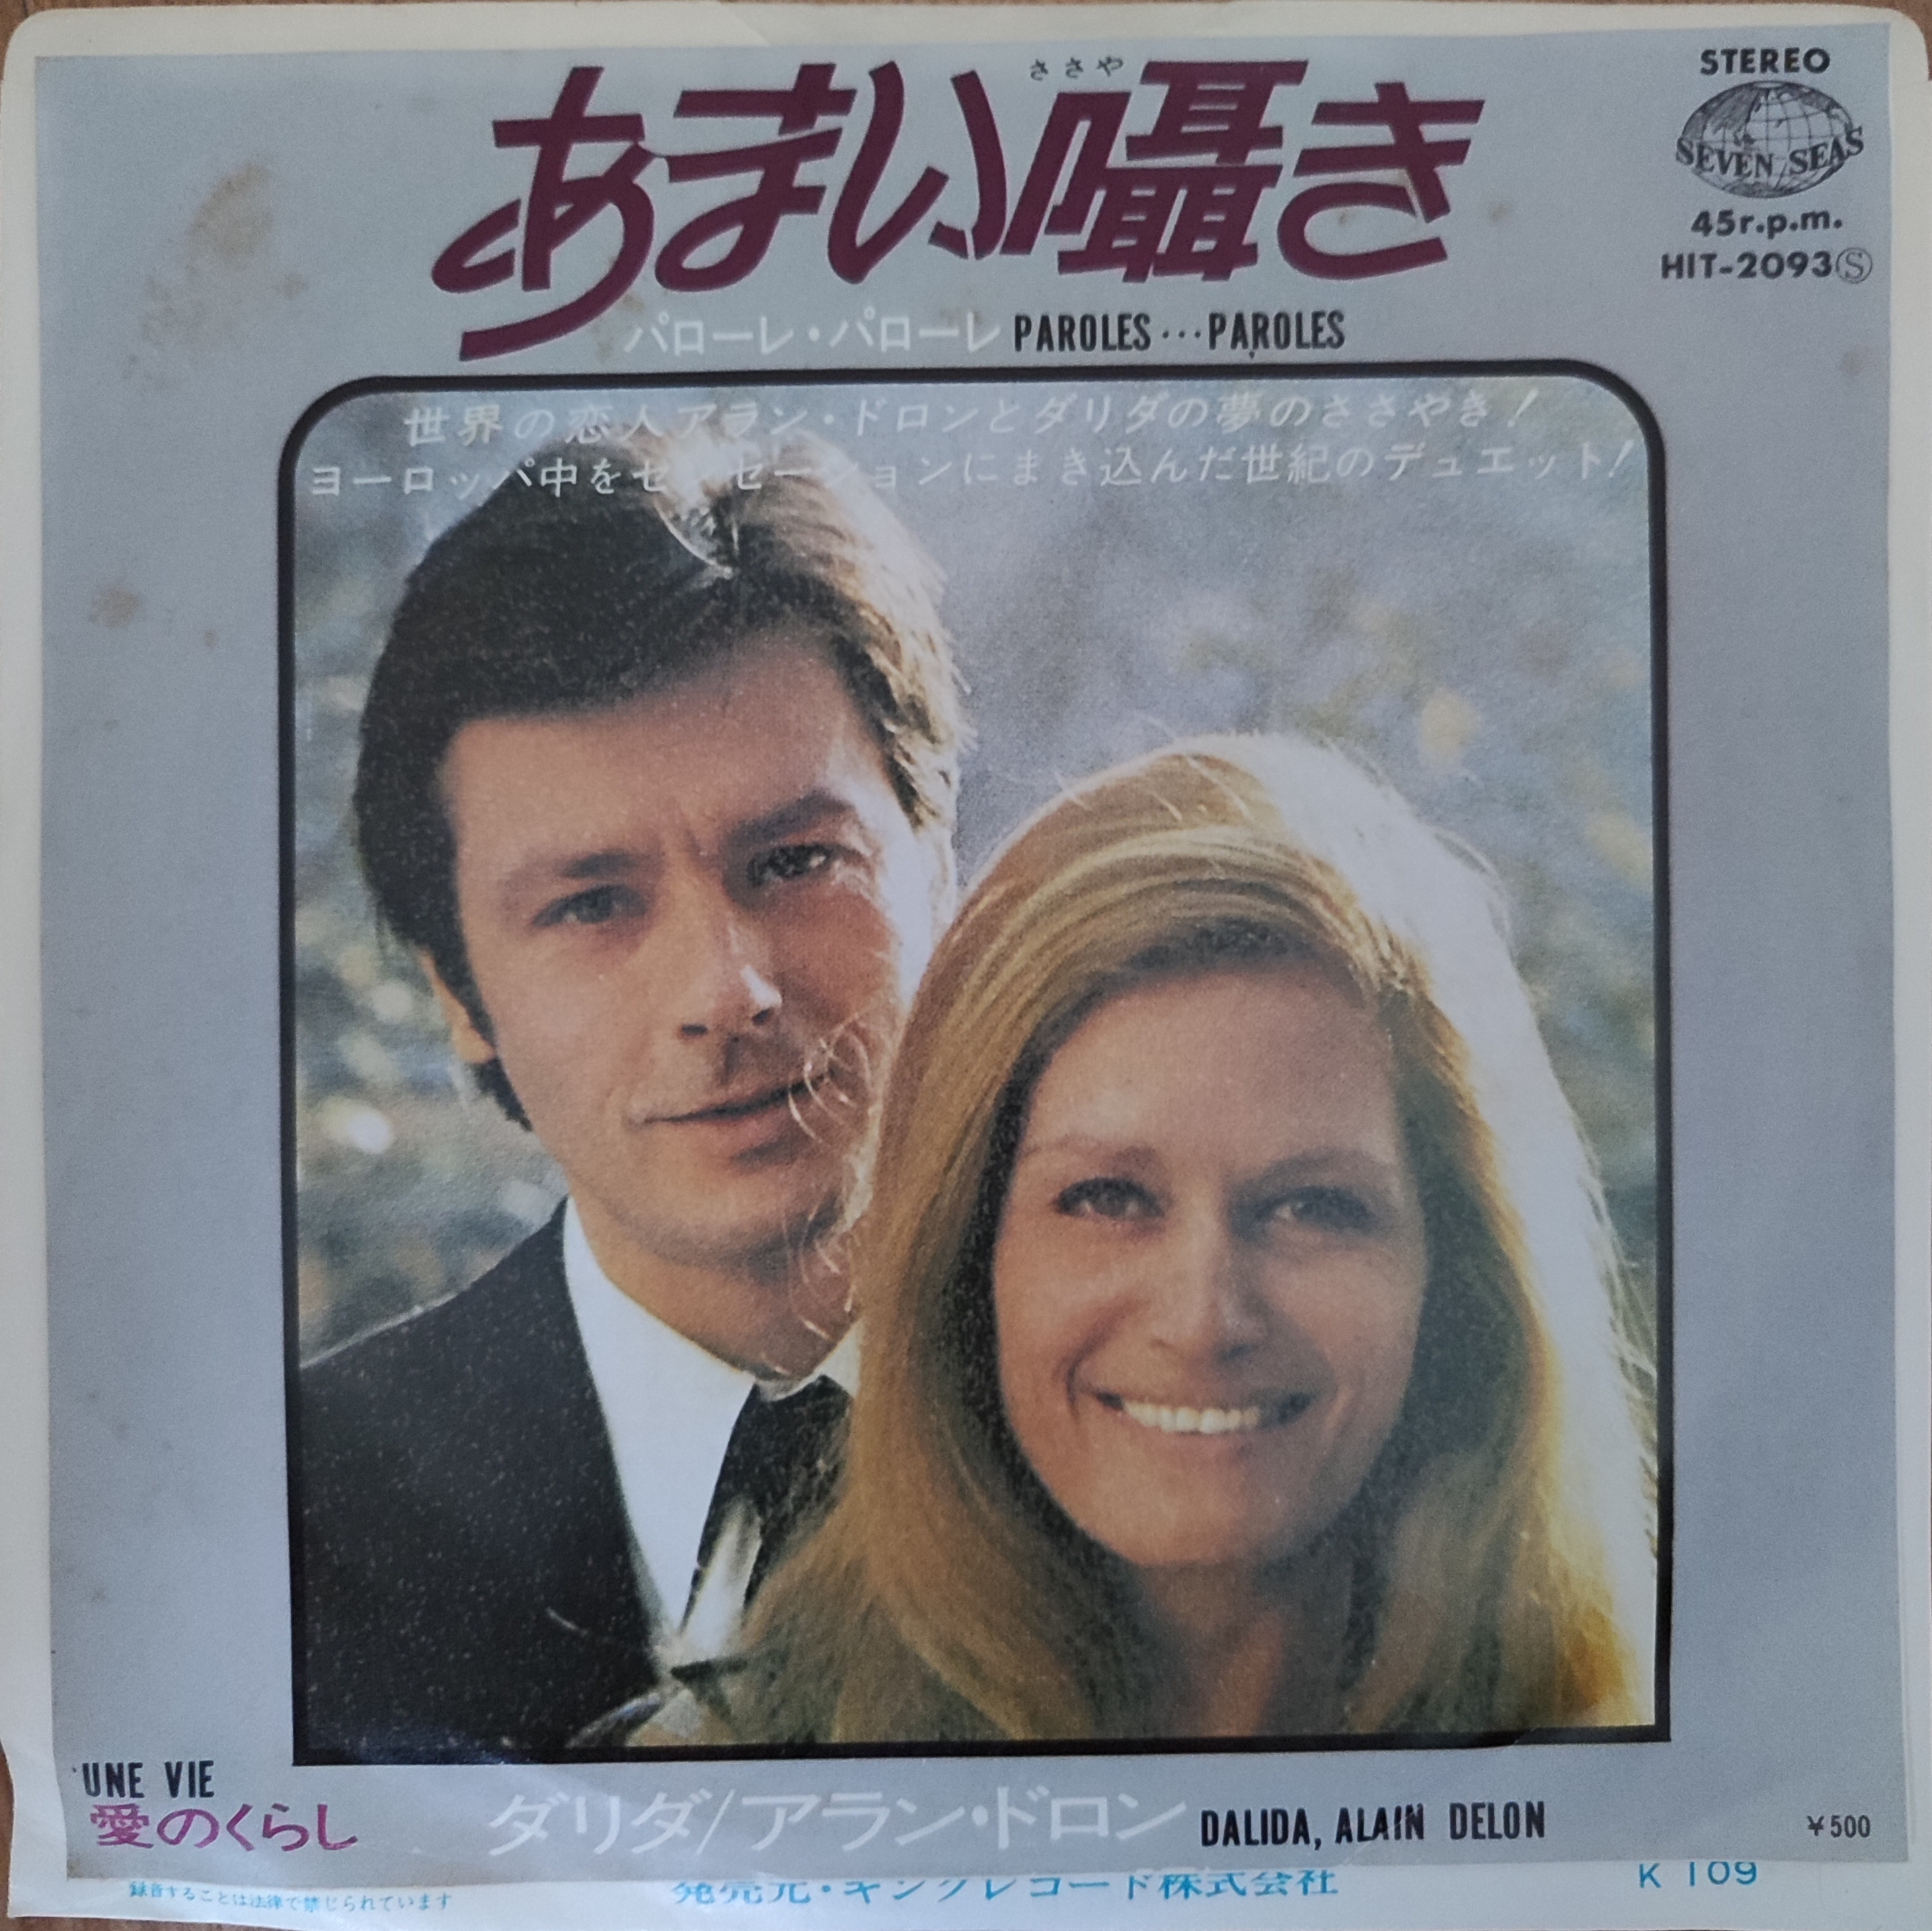 DALIDA & ALAIN DELON - Paroles... Paroles / Une Vie - Japonya 1973 Basım  45lik Plak - Temiz 2. el